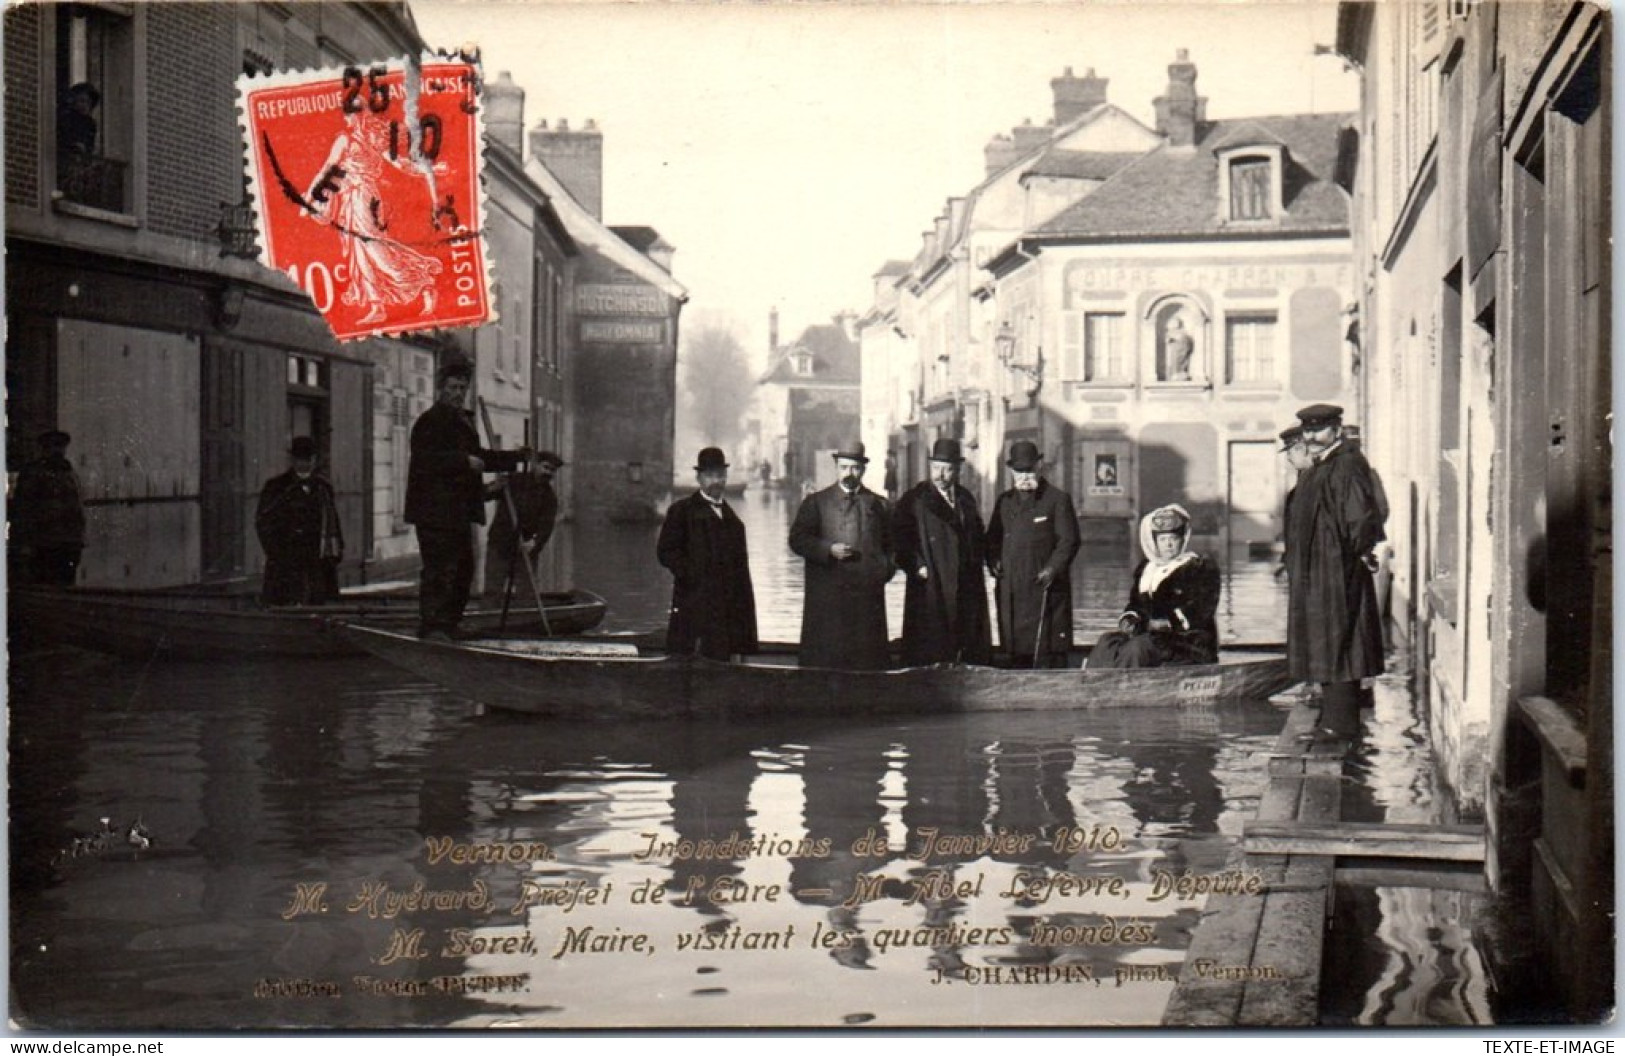 27 VERNON - CARTE PHOTO - Crue De 1910, Visite Du Maire - Vernon